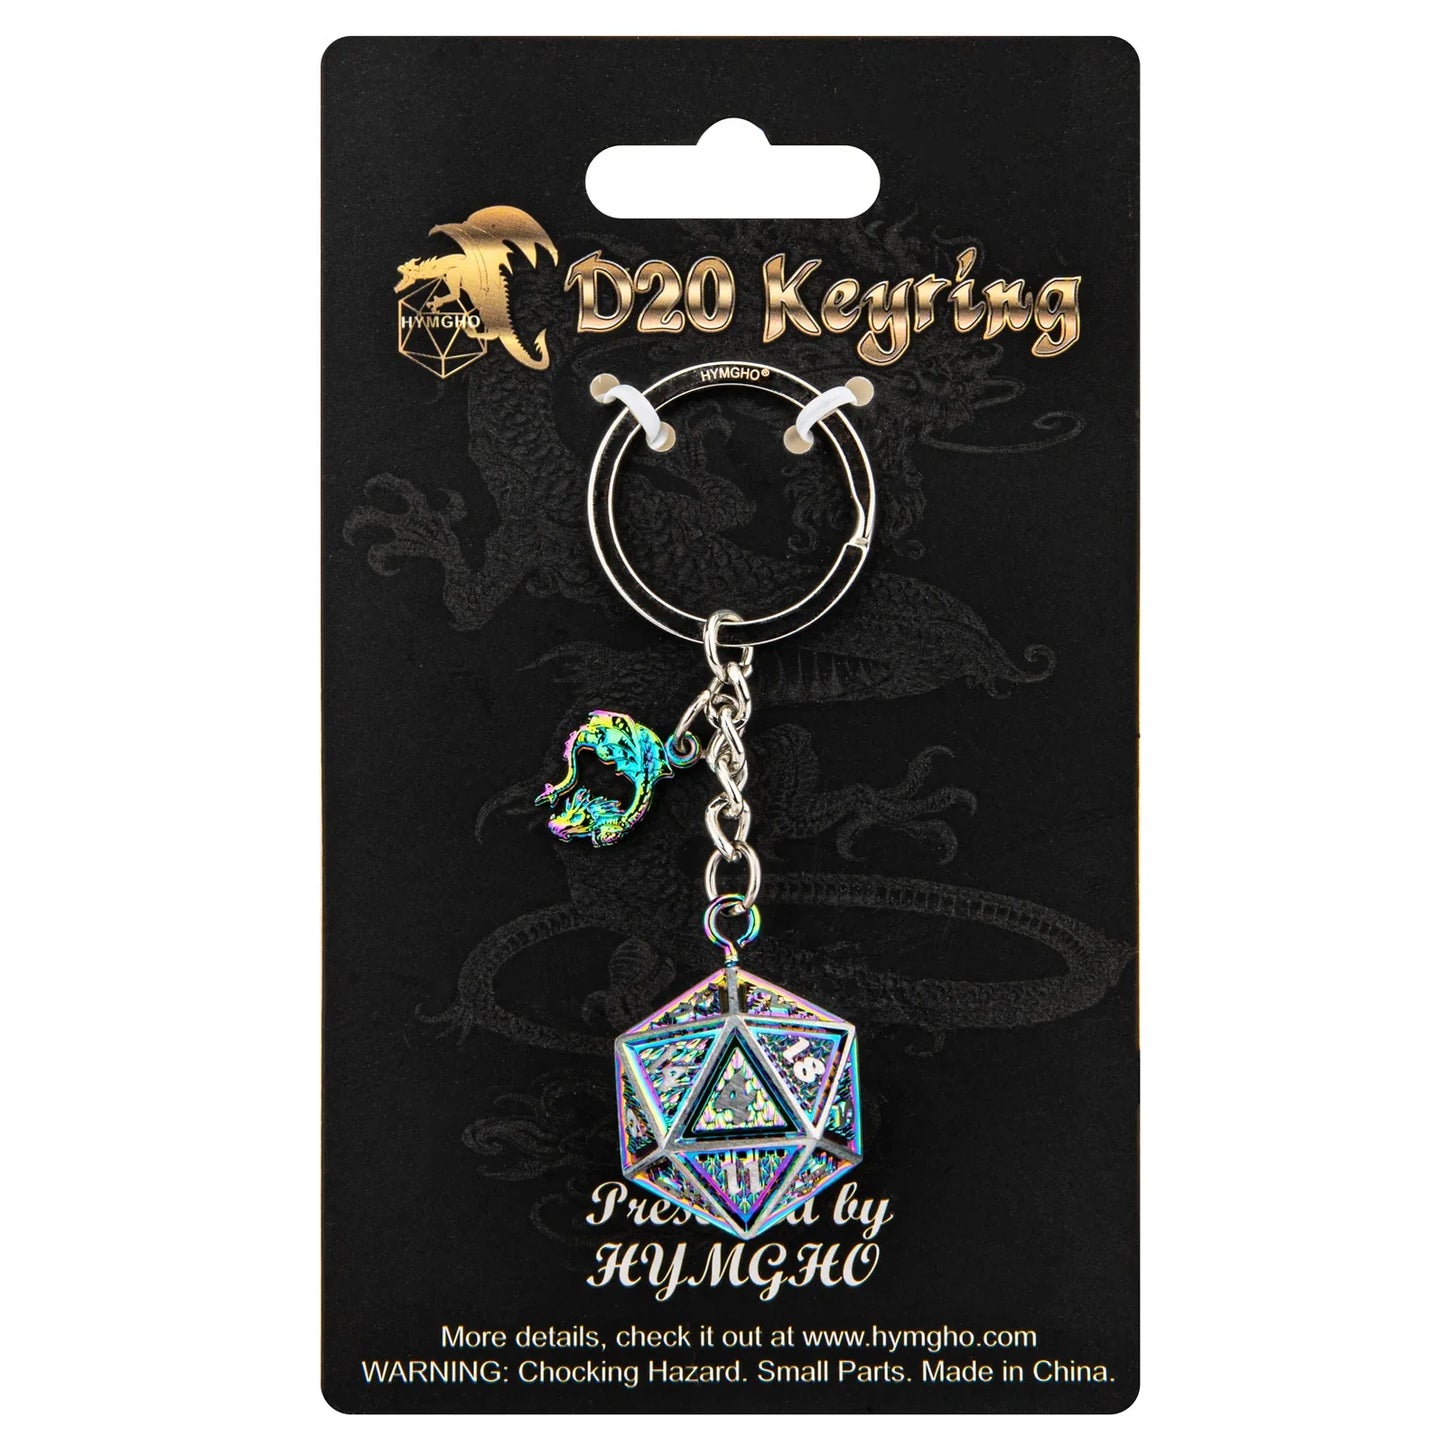 D20 Keychain